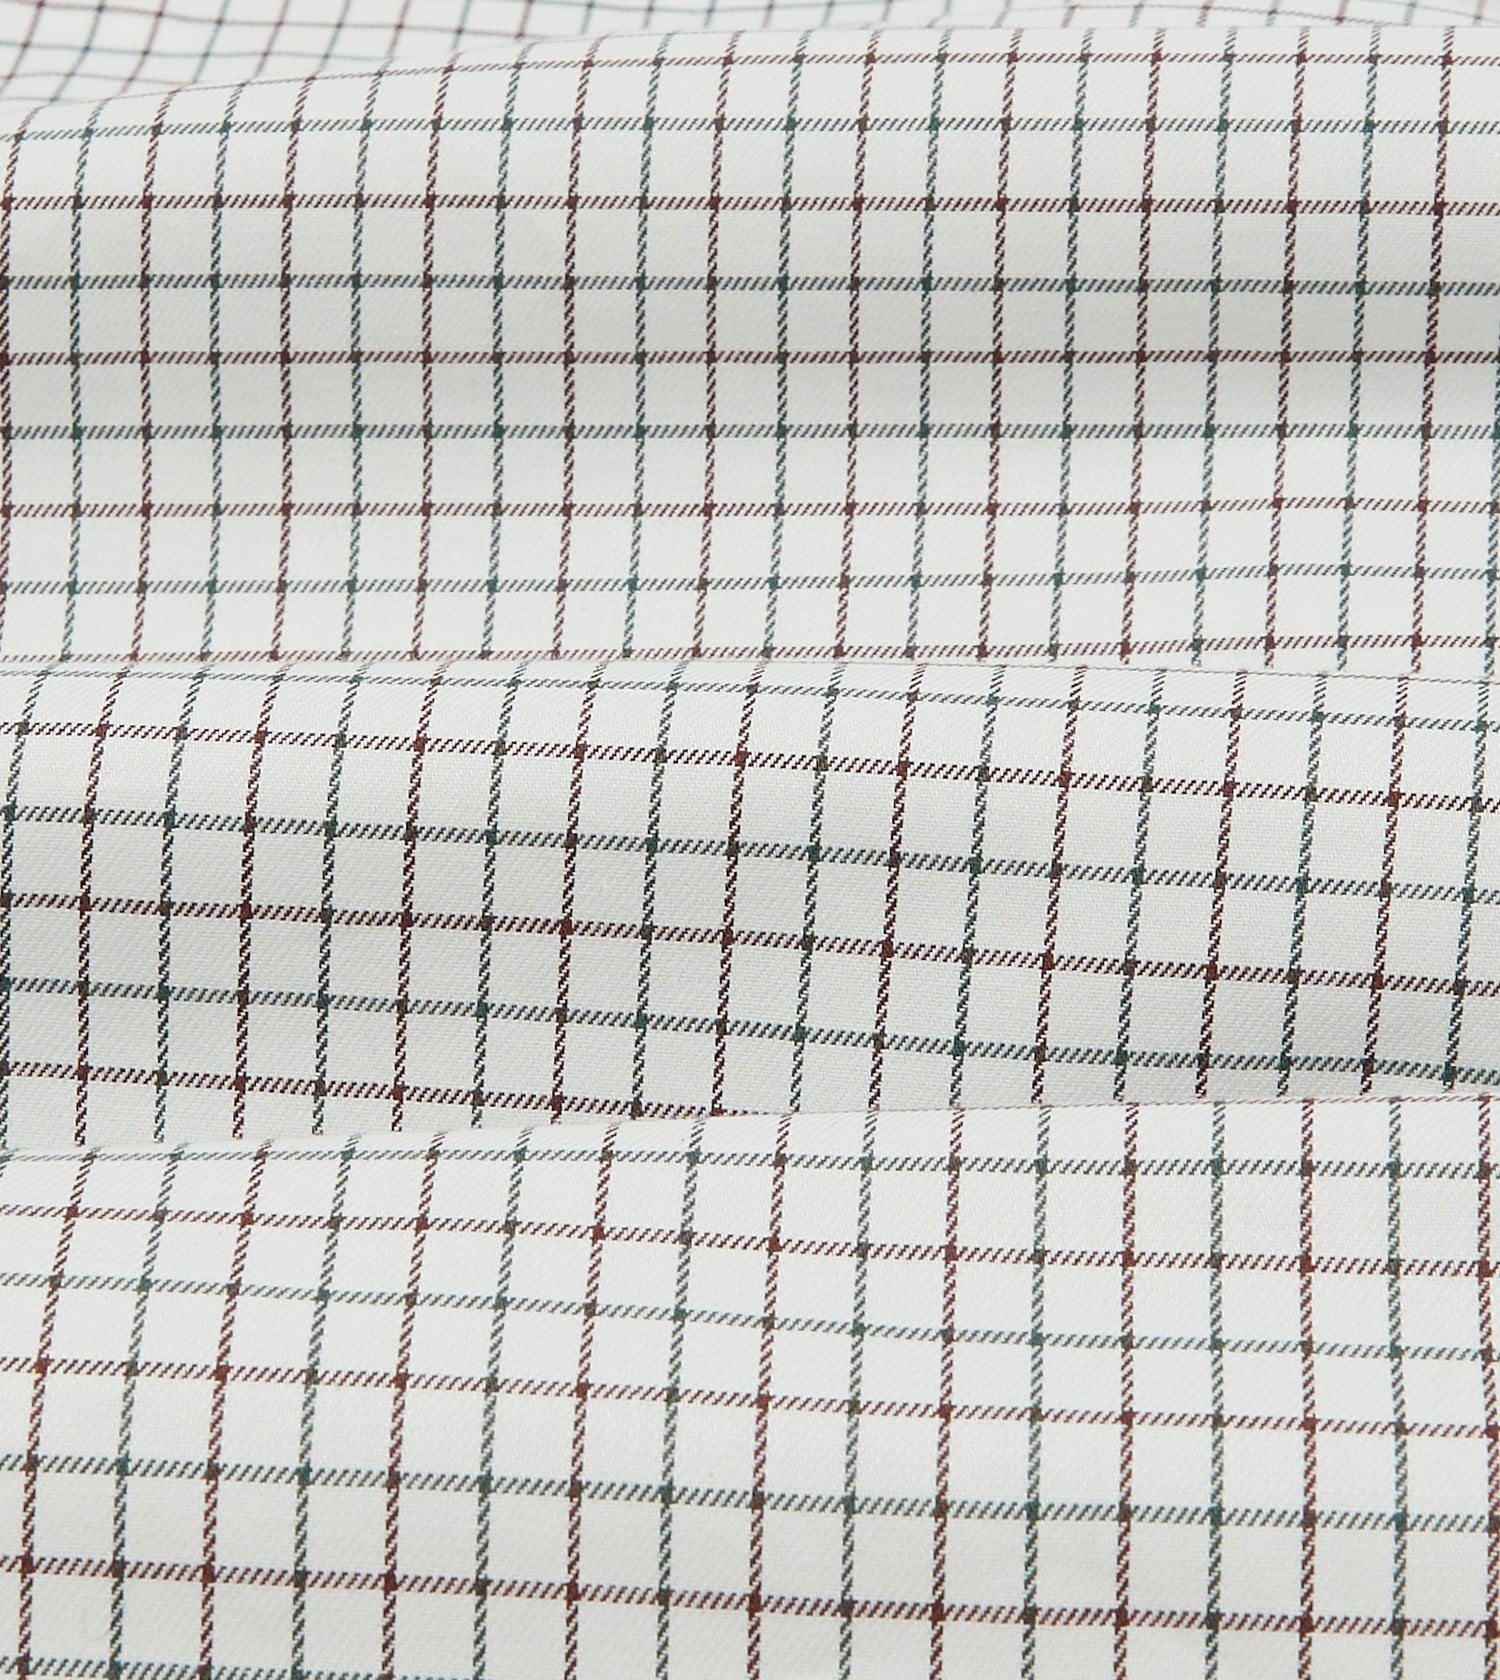 Tattersall Cotton Two-Pocket Western Shirt